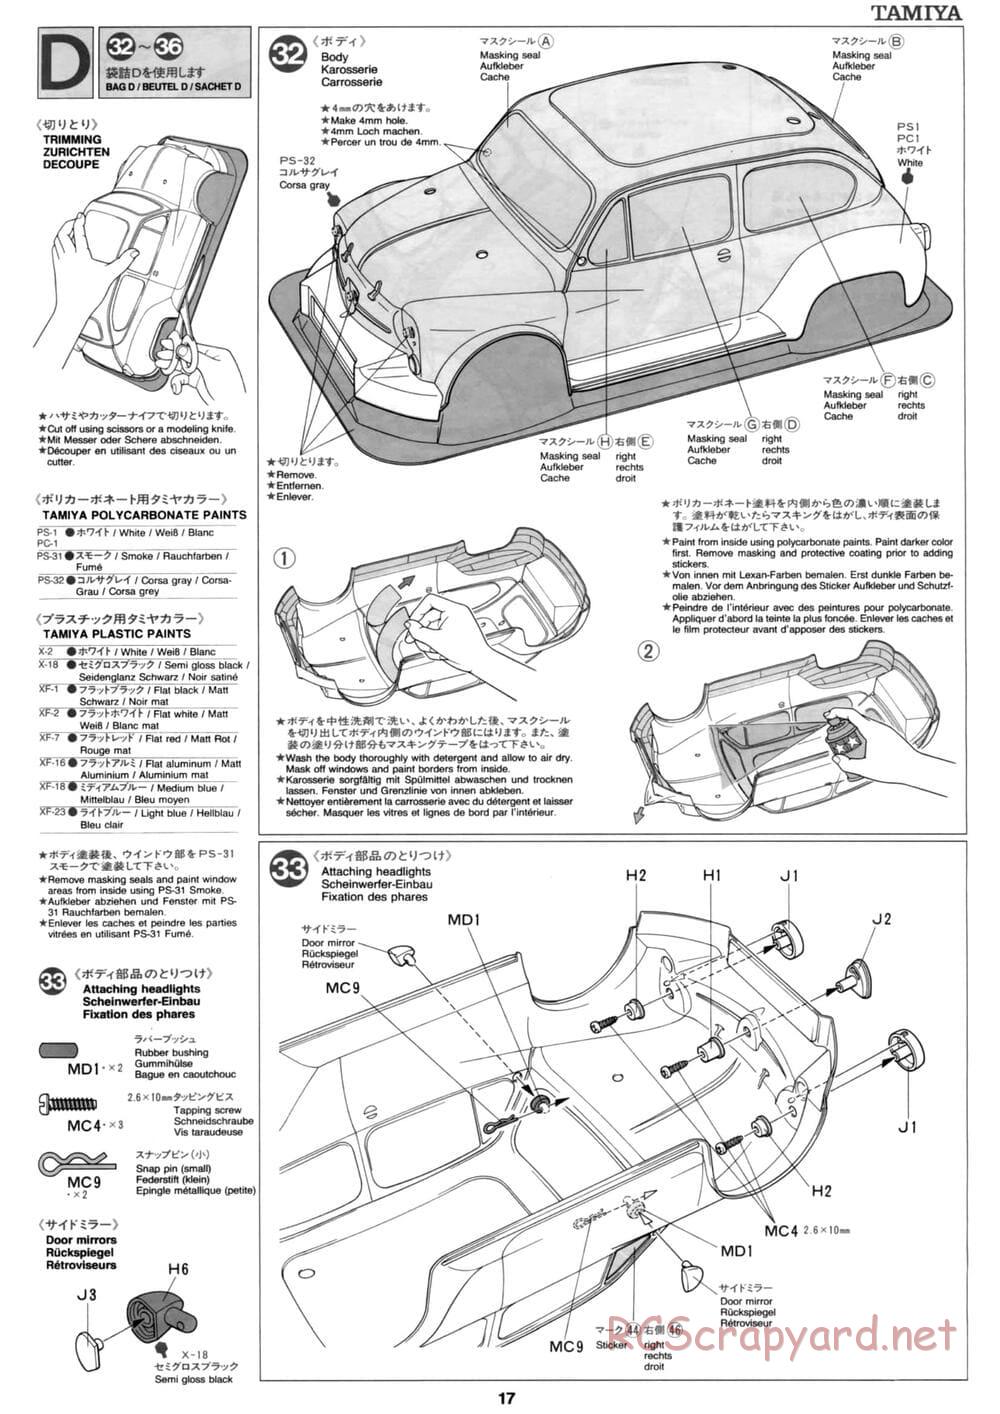 Tamiya - Fiat Abarth 1000 TCR Berlina Corse - M02 Chassis - Manual - Page 17